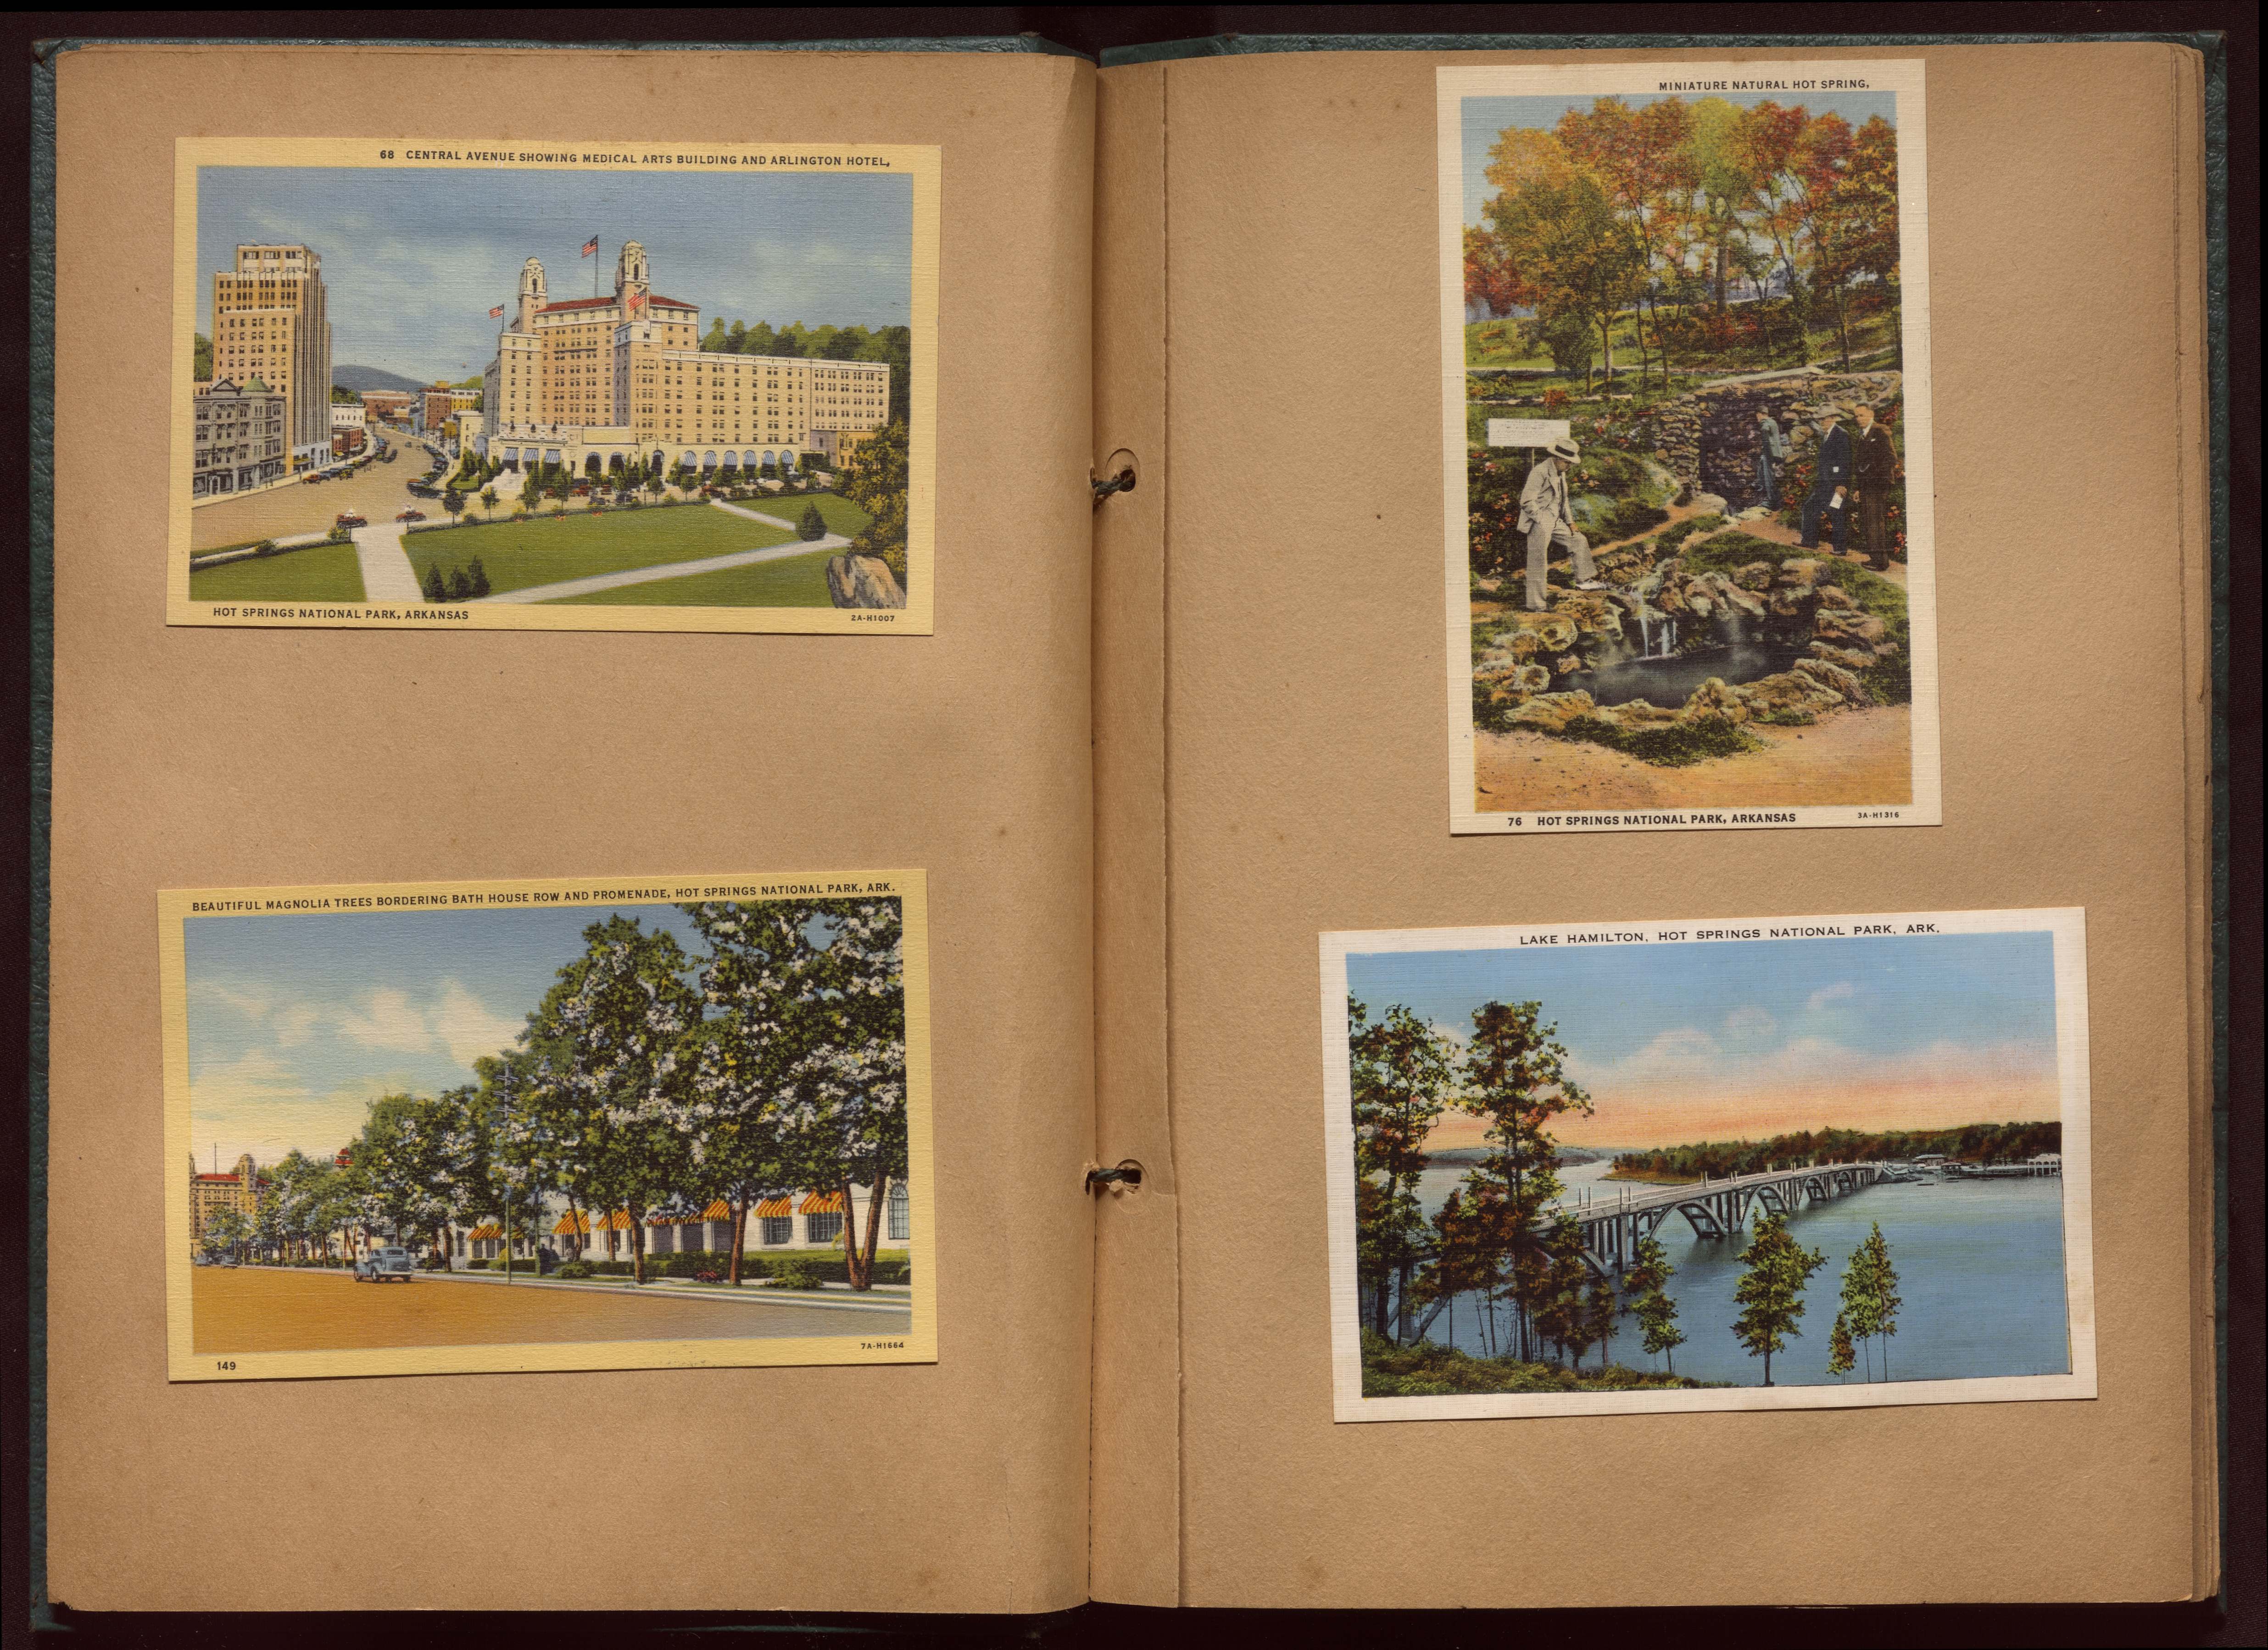 Postcards of Hot Springs National Park, Arkansas [Trip to Hot Springs, Arkansas, 22 October 1940]